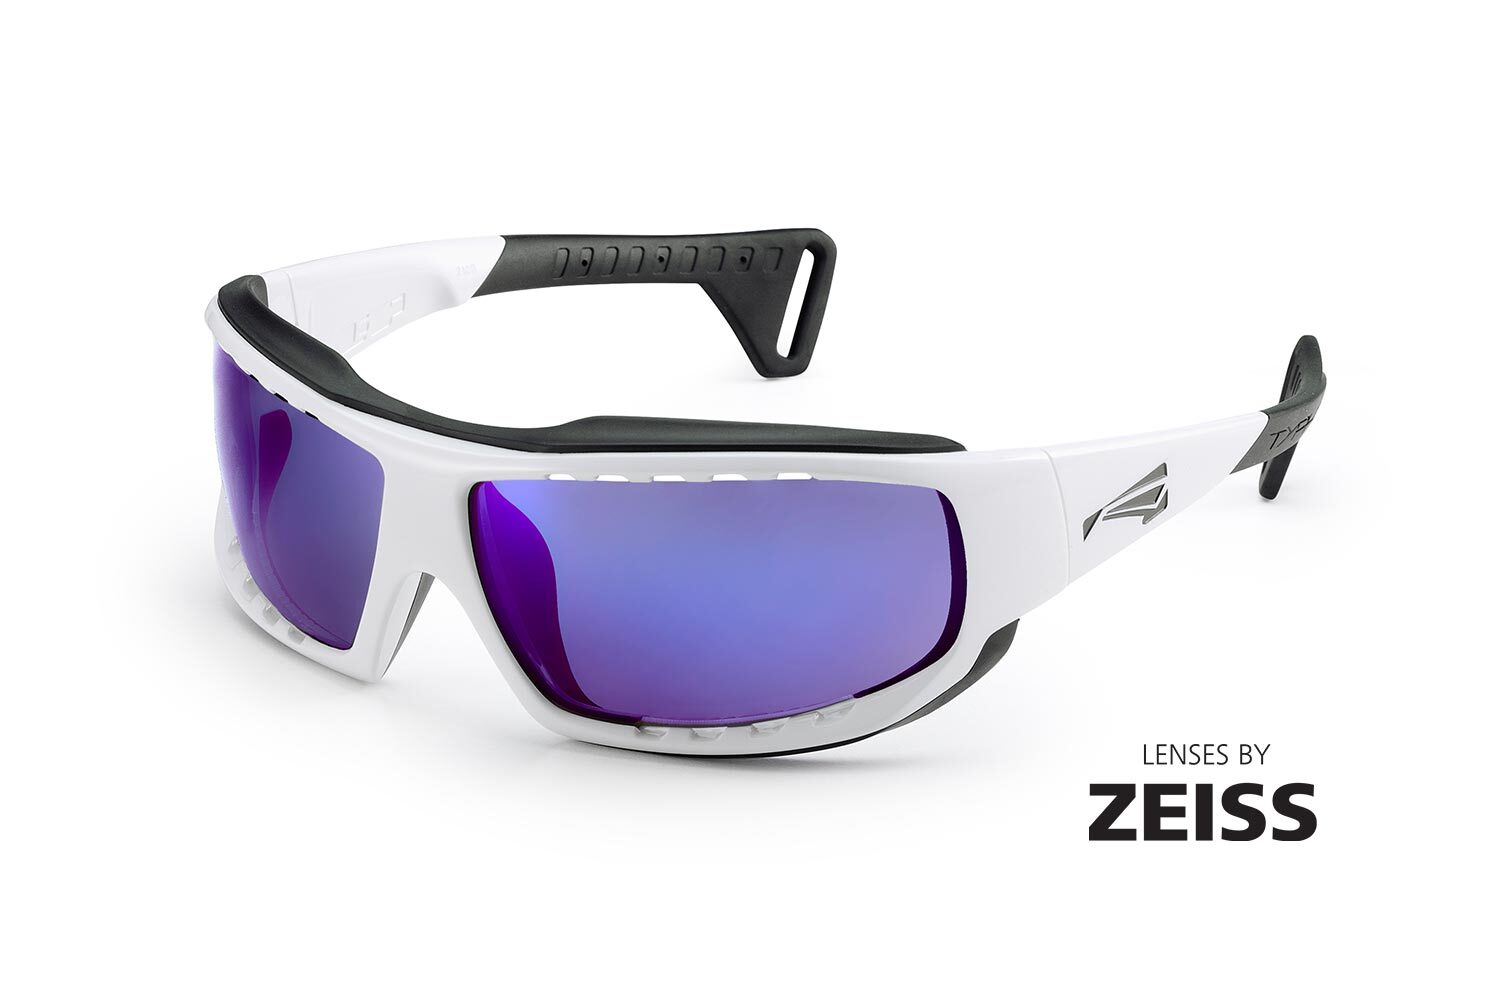 Спортивные очки LiP Typhoon / Gloss White - Black / Zeiss / PA Polarized / Pacific Blue